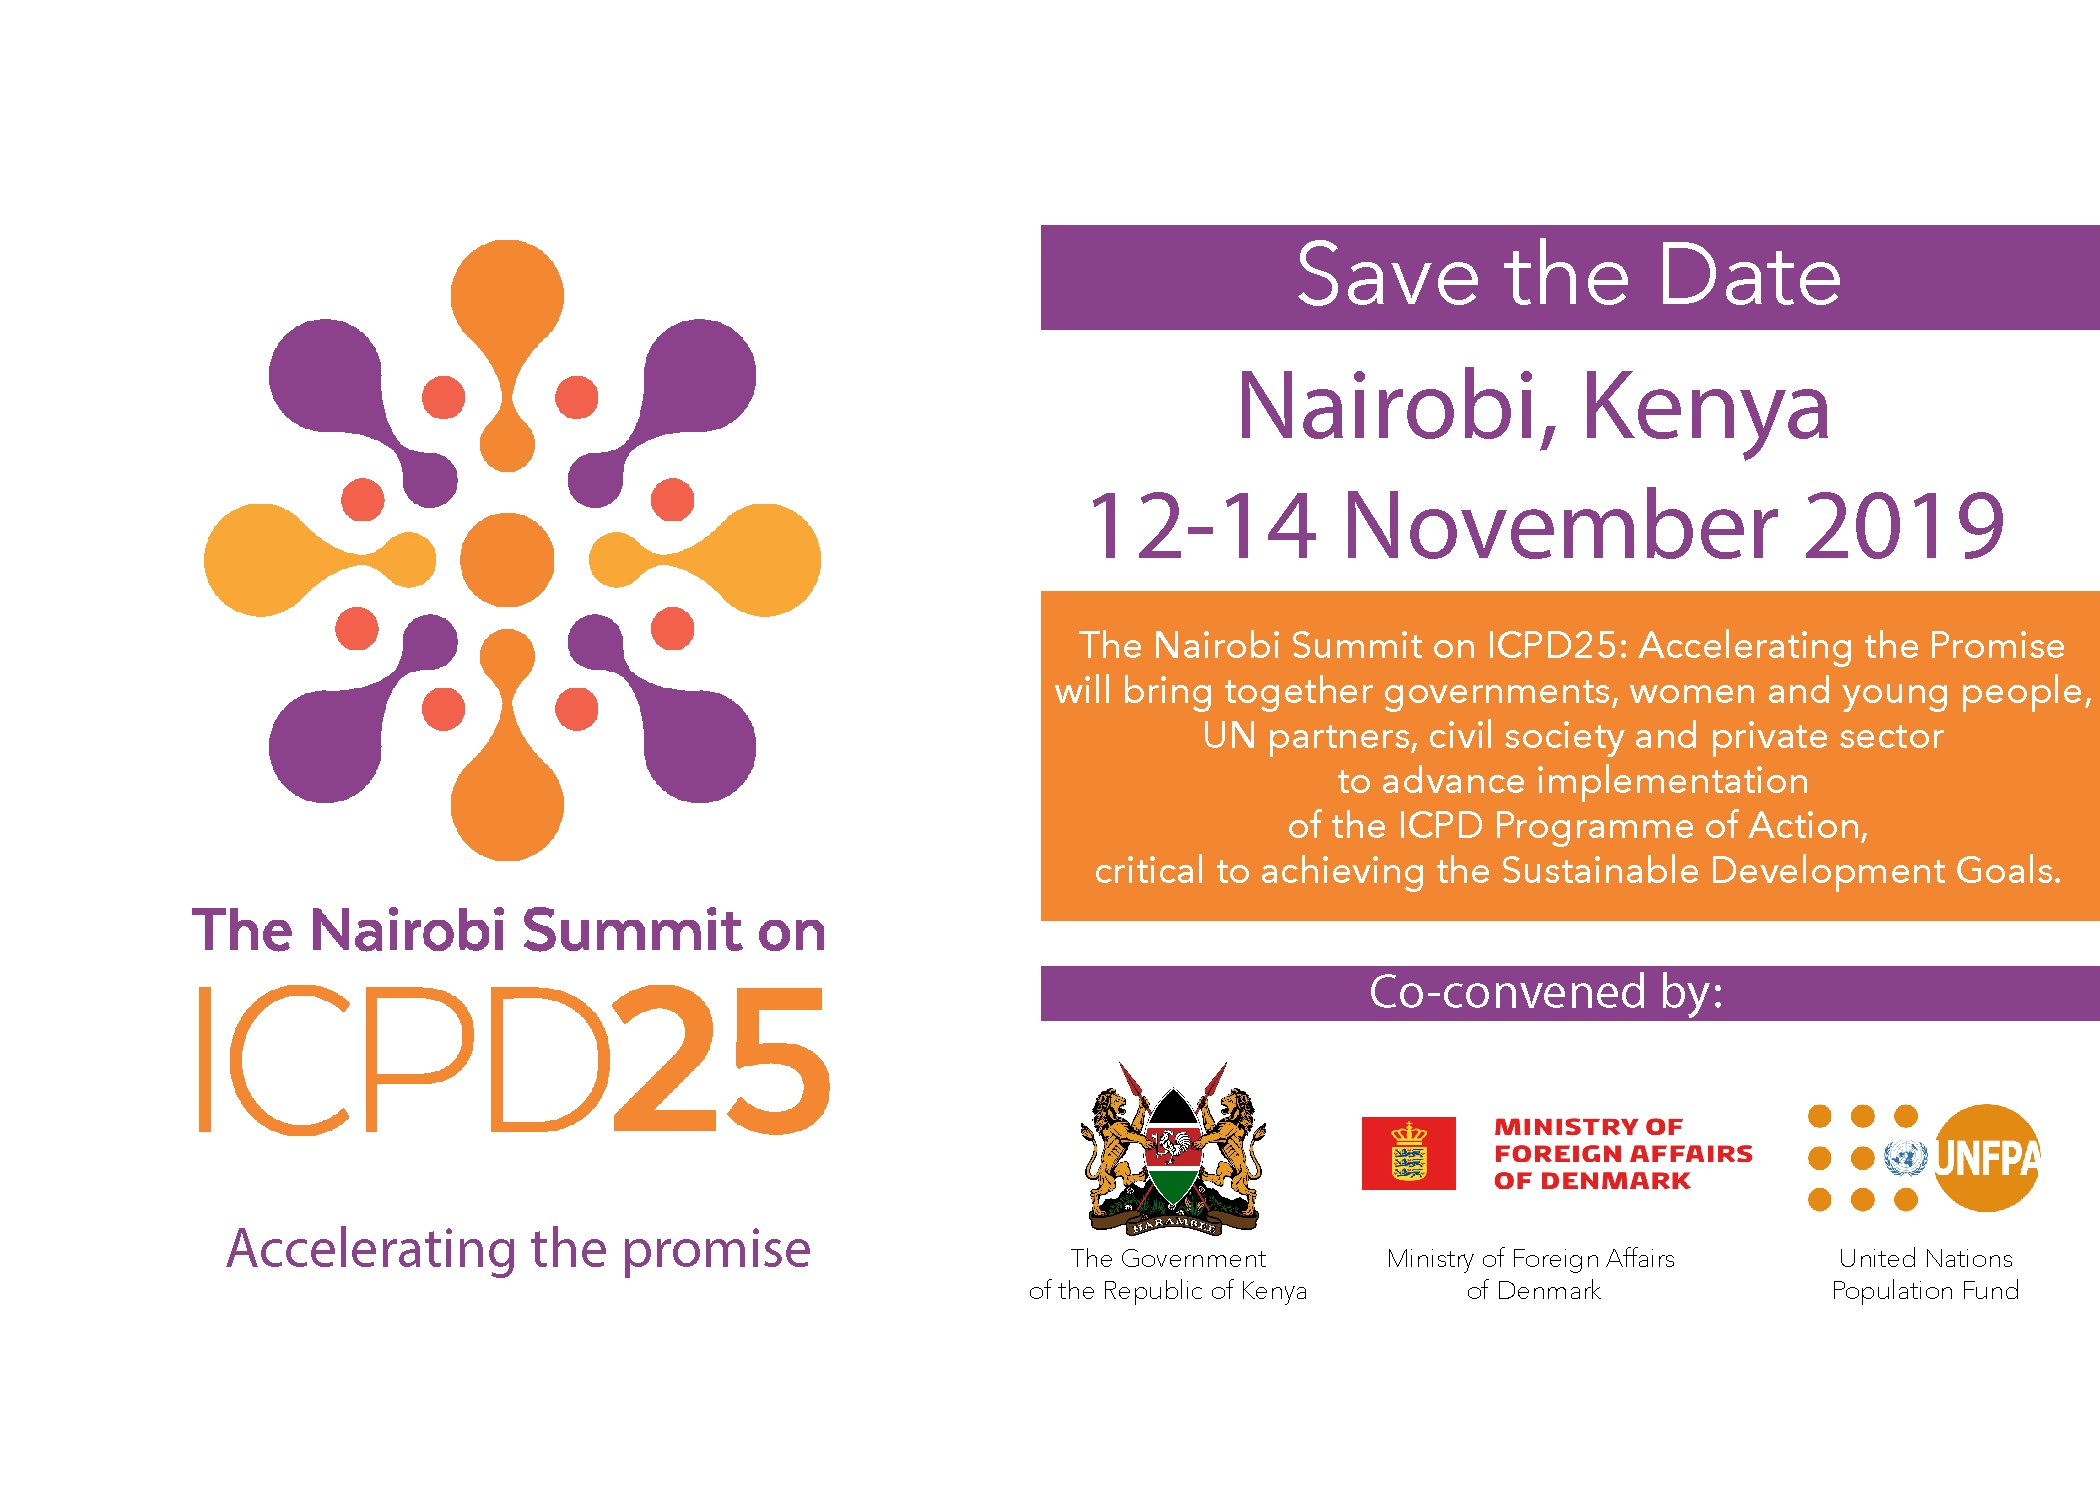 [Image: Countdown 2030 Europe provides inputs to Nairobi Summit Global Commitments]